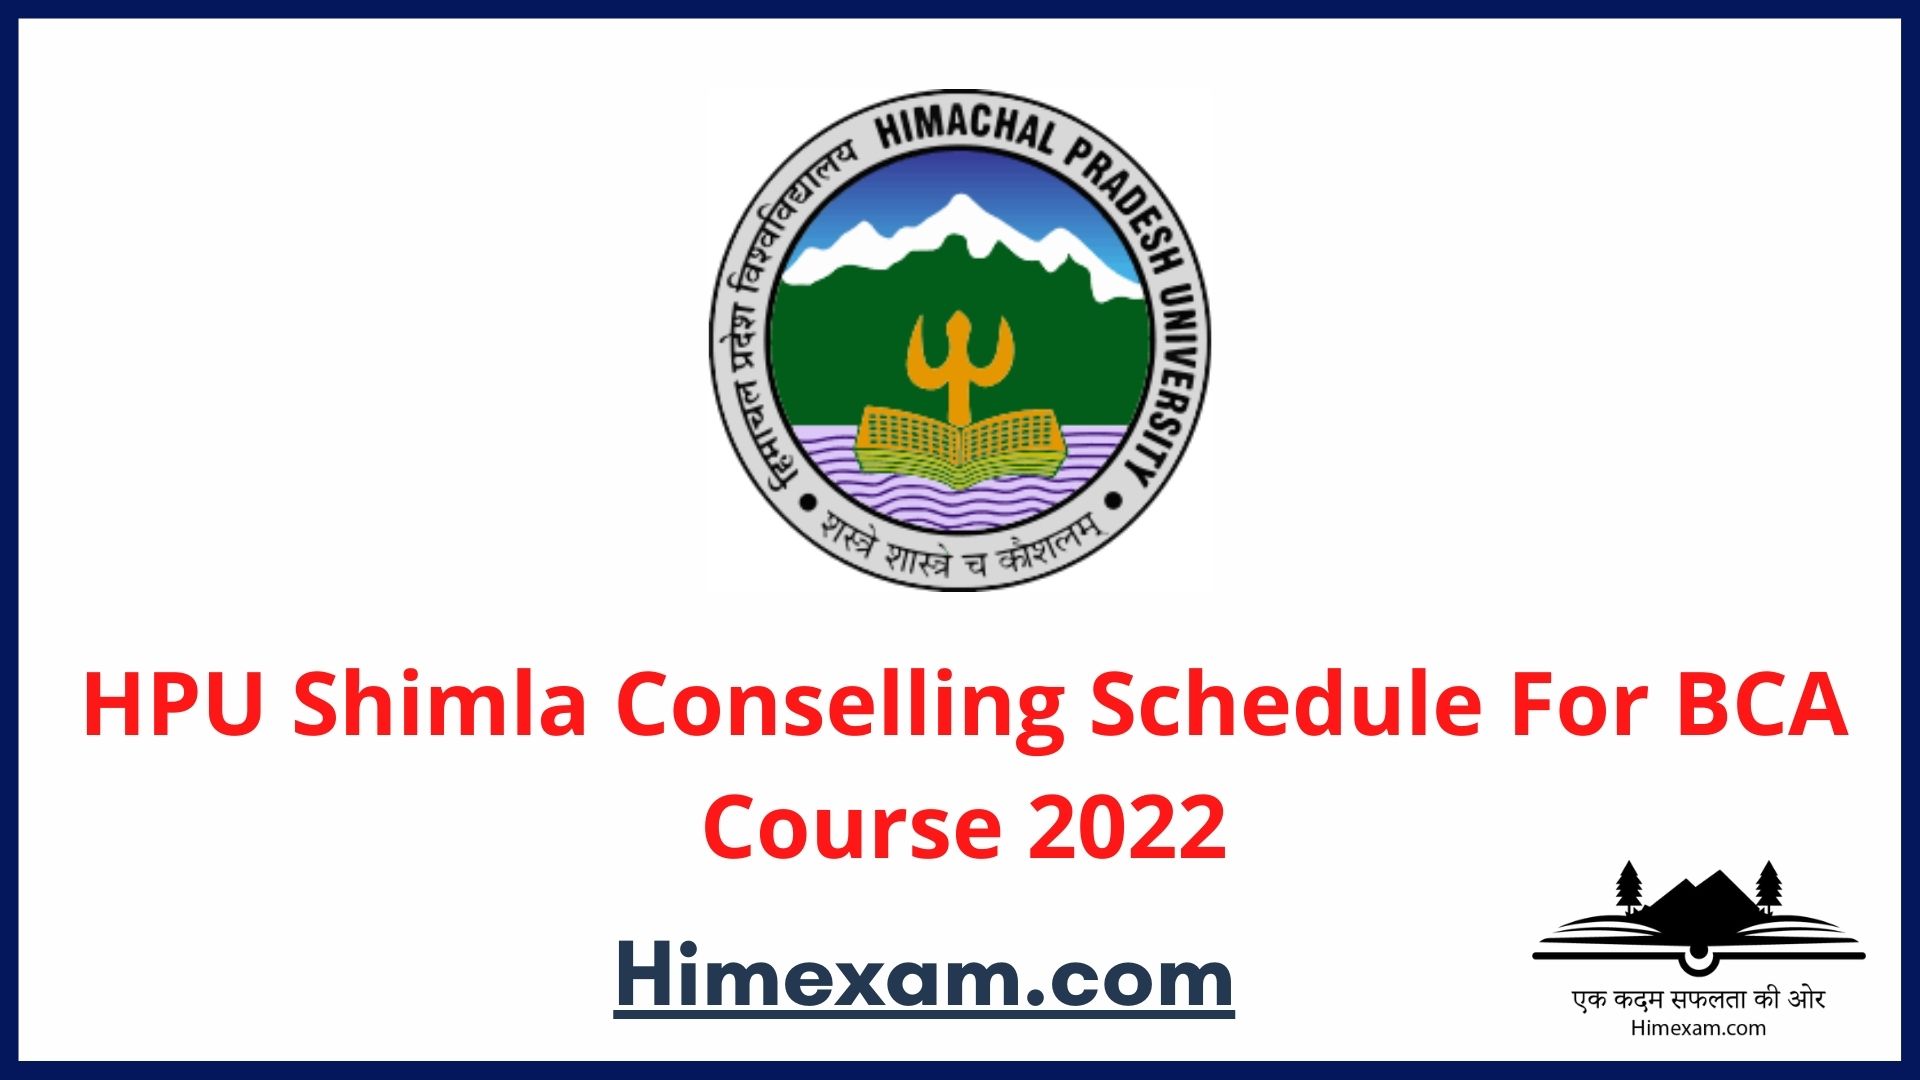 HPU Shimla Conselling Schedule For BCA Course 2022